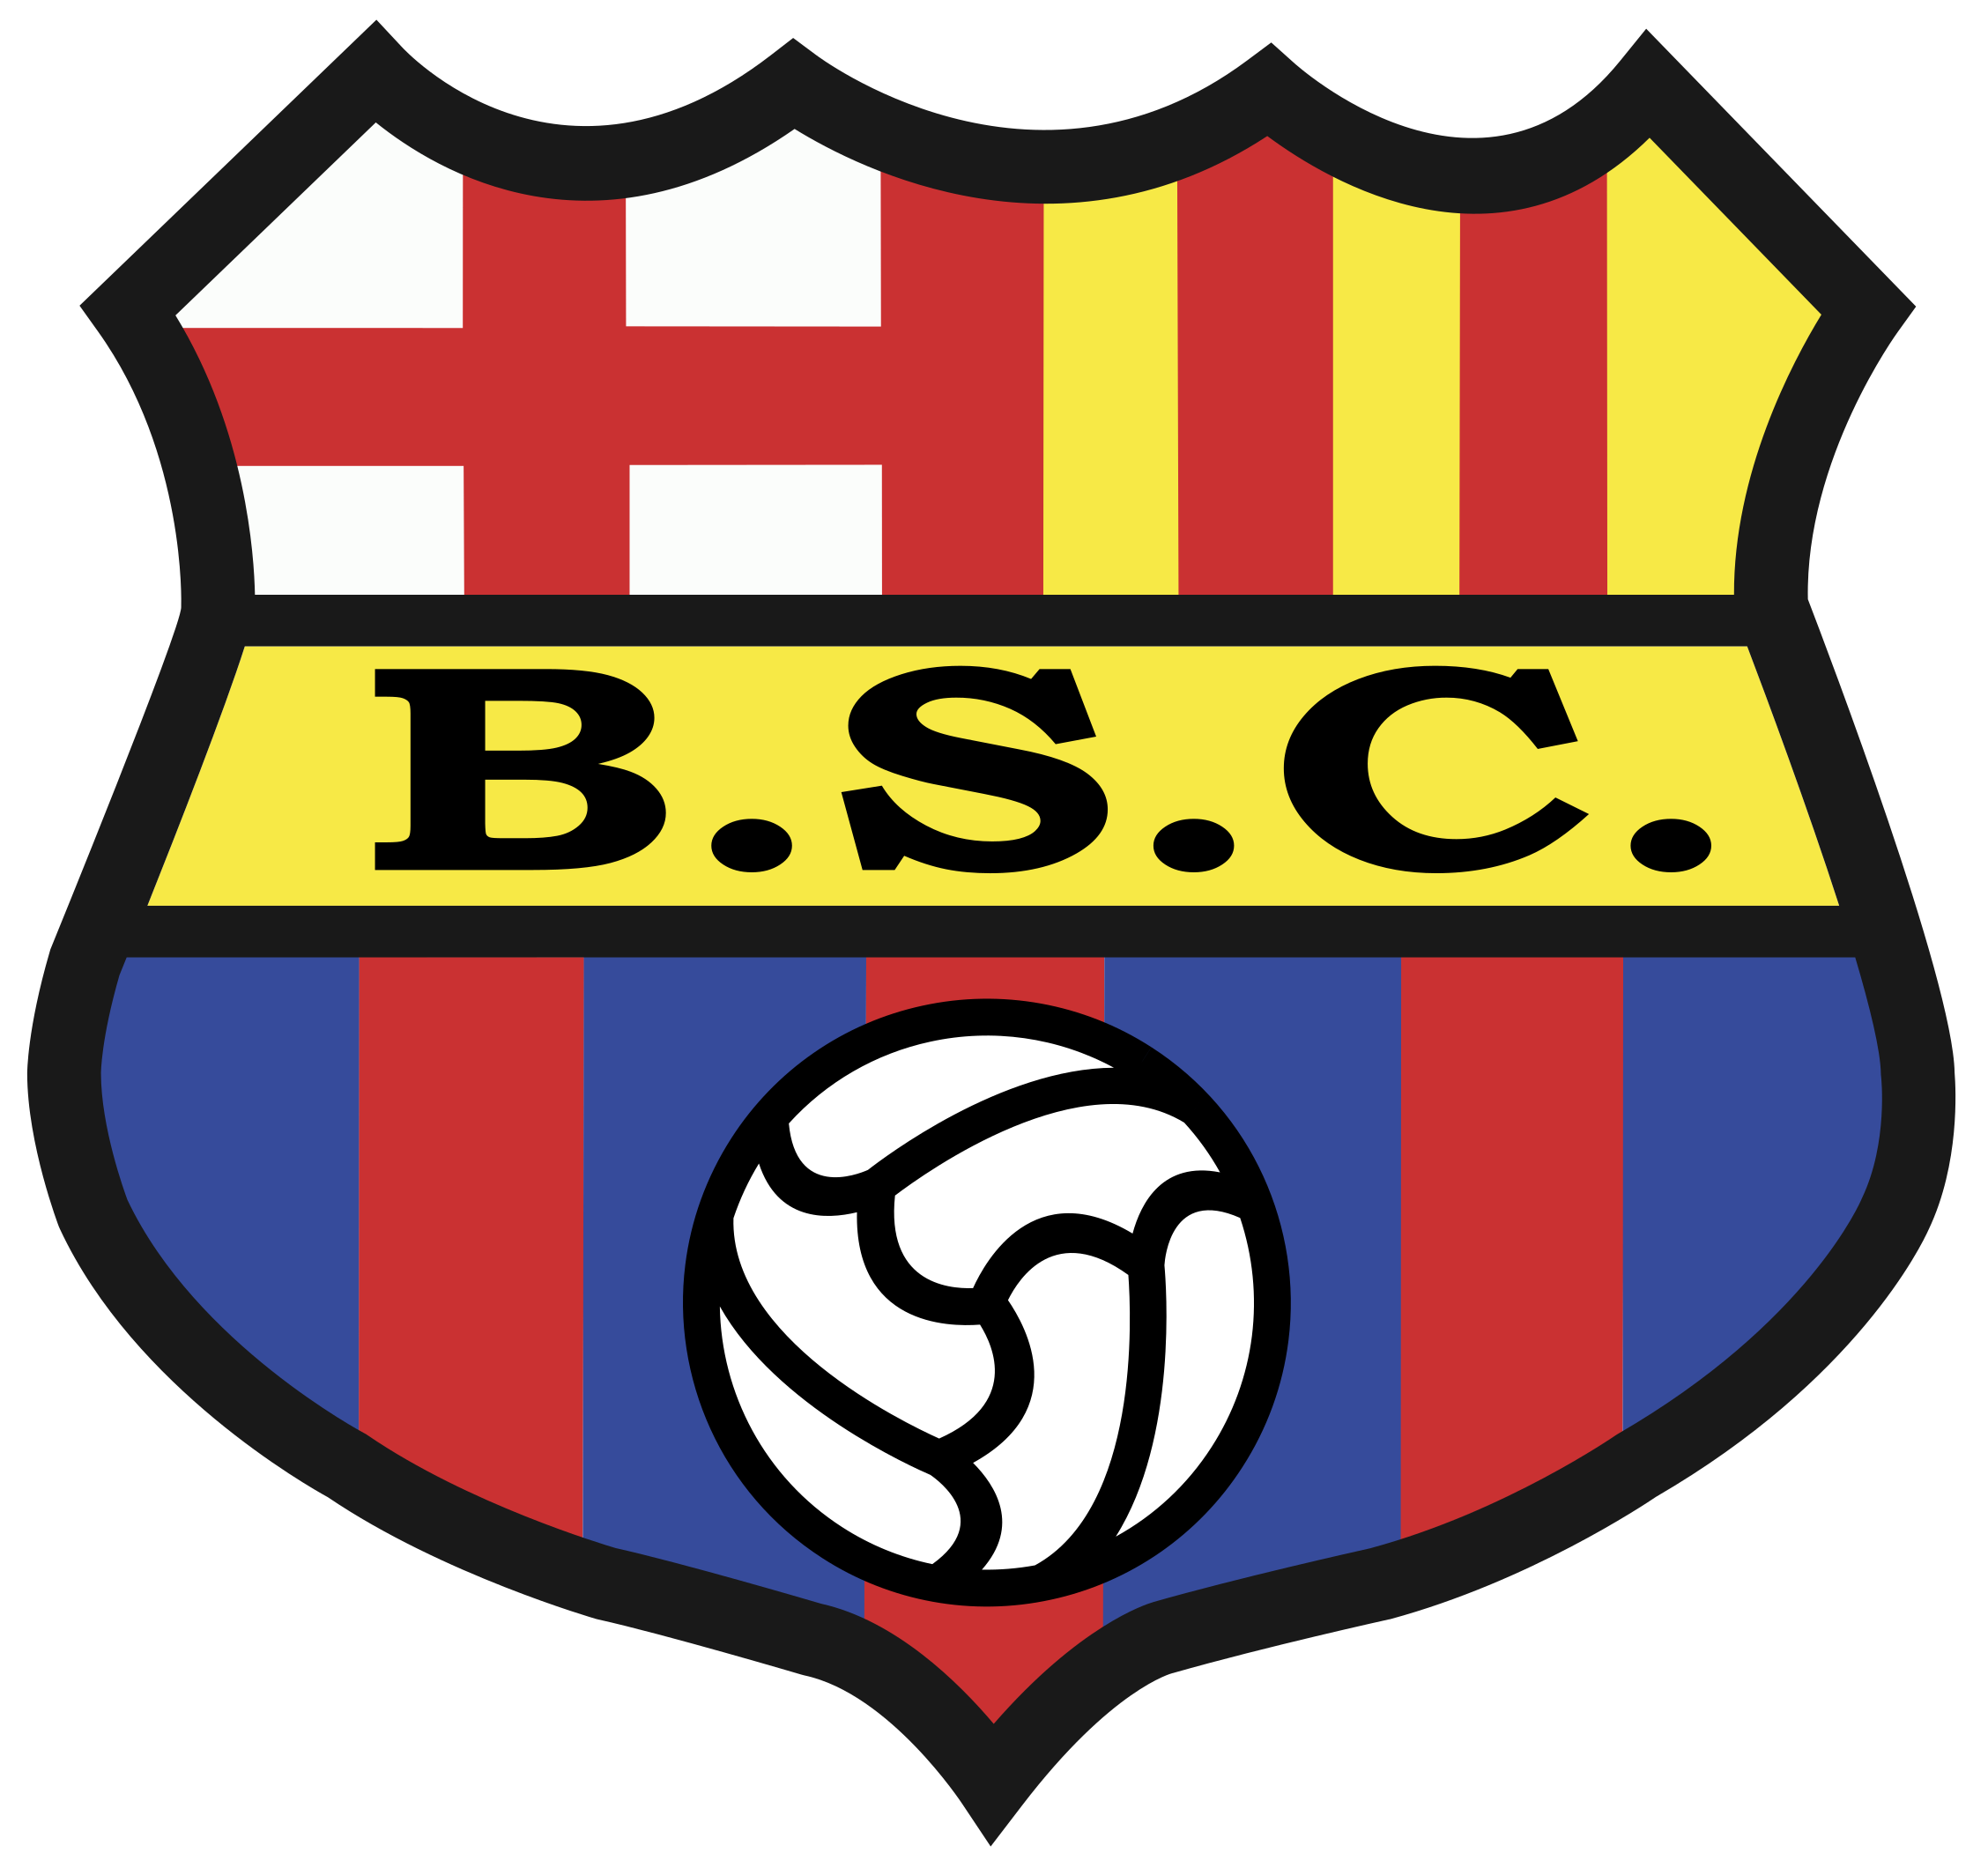 Barcelona SC vs São Paulo Prediction: The Paulistas want to bring home points